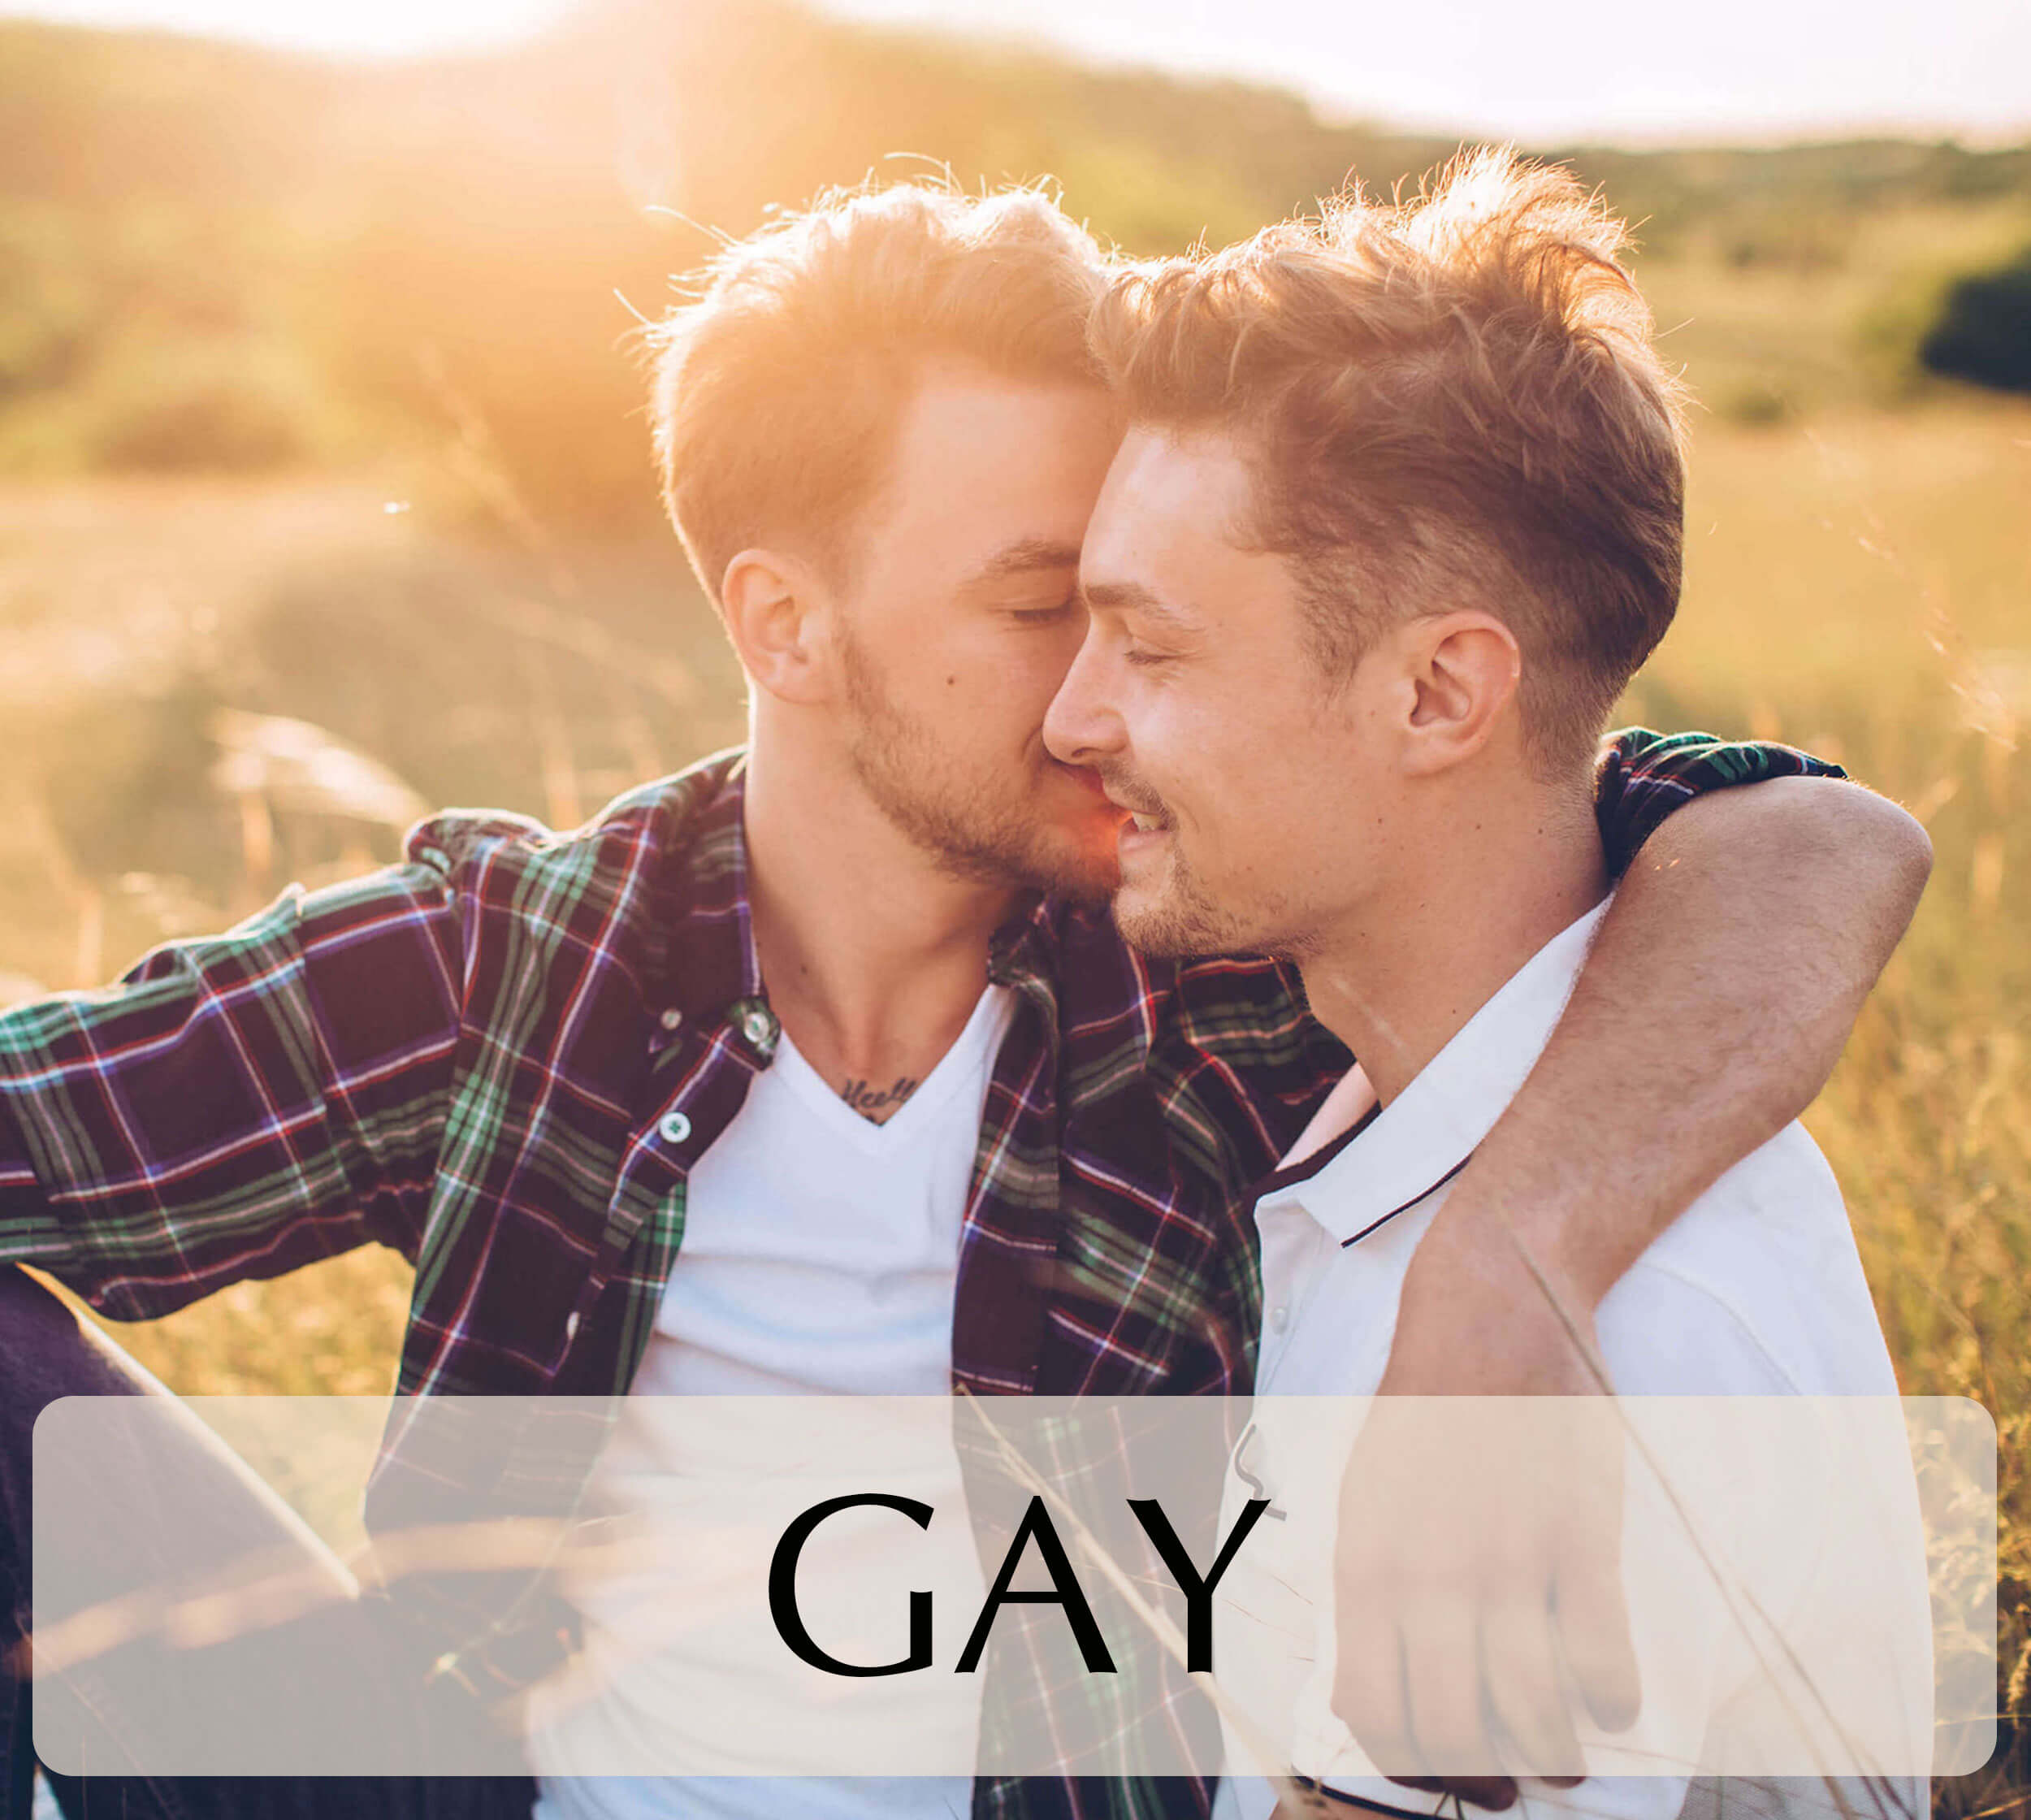 Gratis gay dating NZ